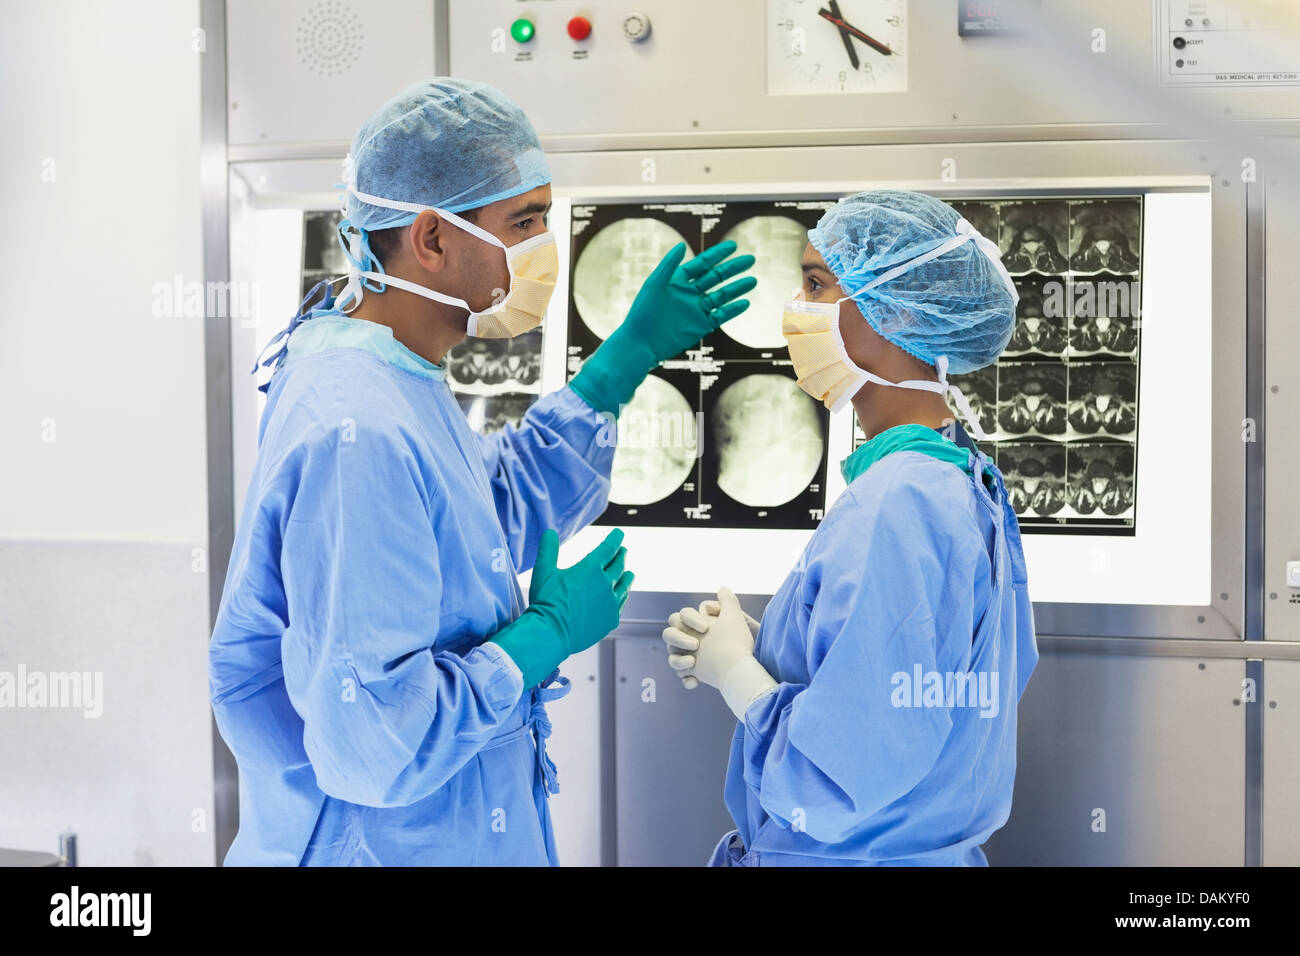 Surgeons examining x-rays in hospital Stock Photo